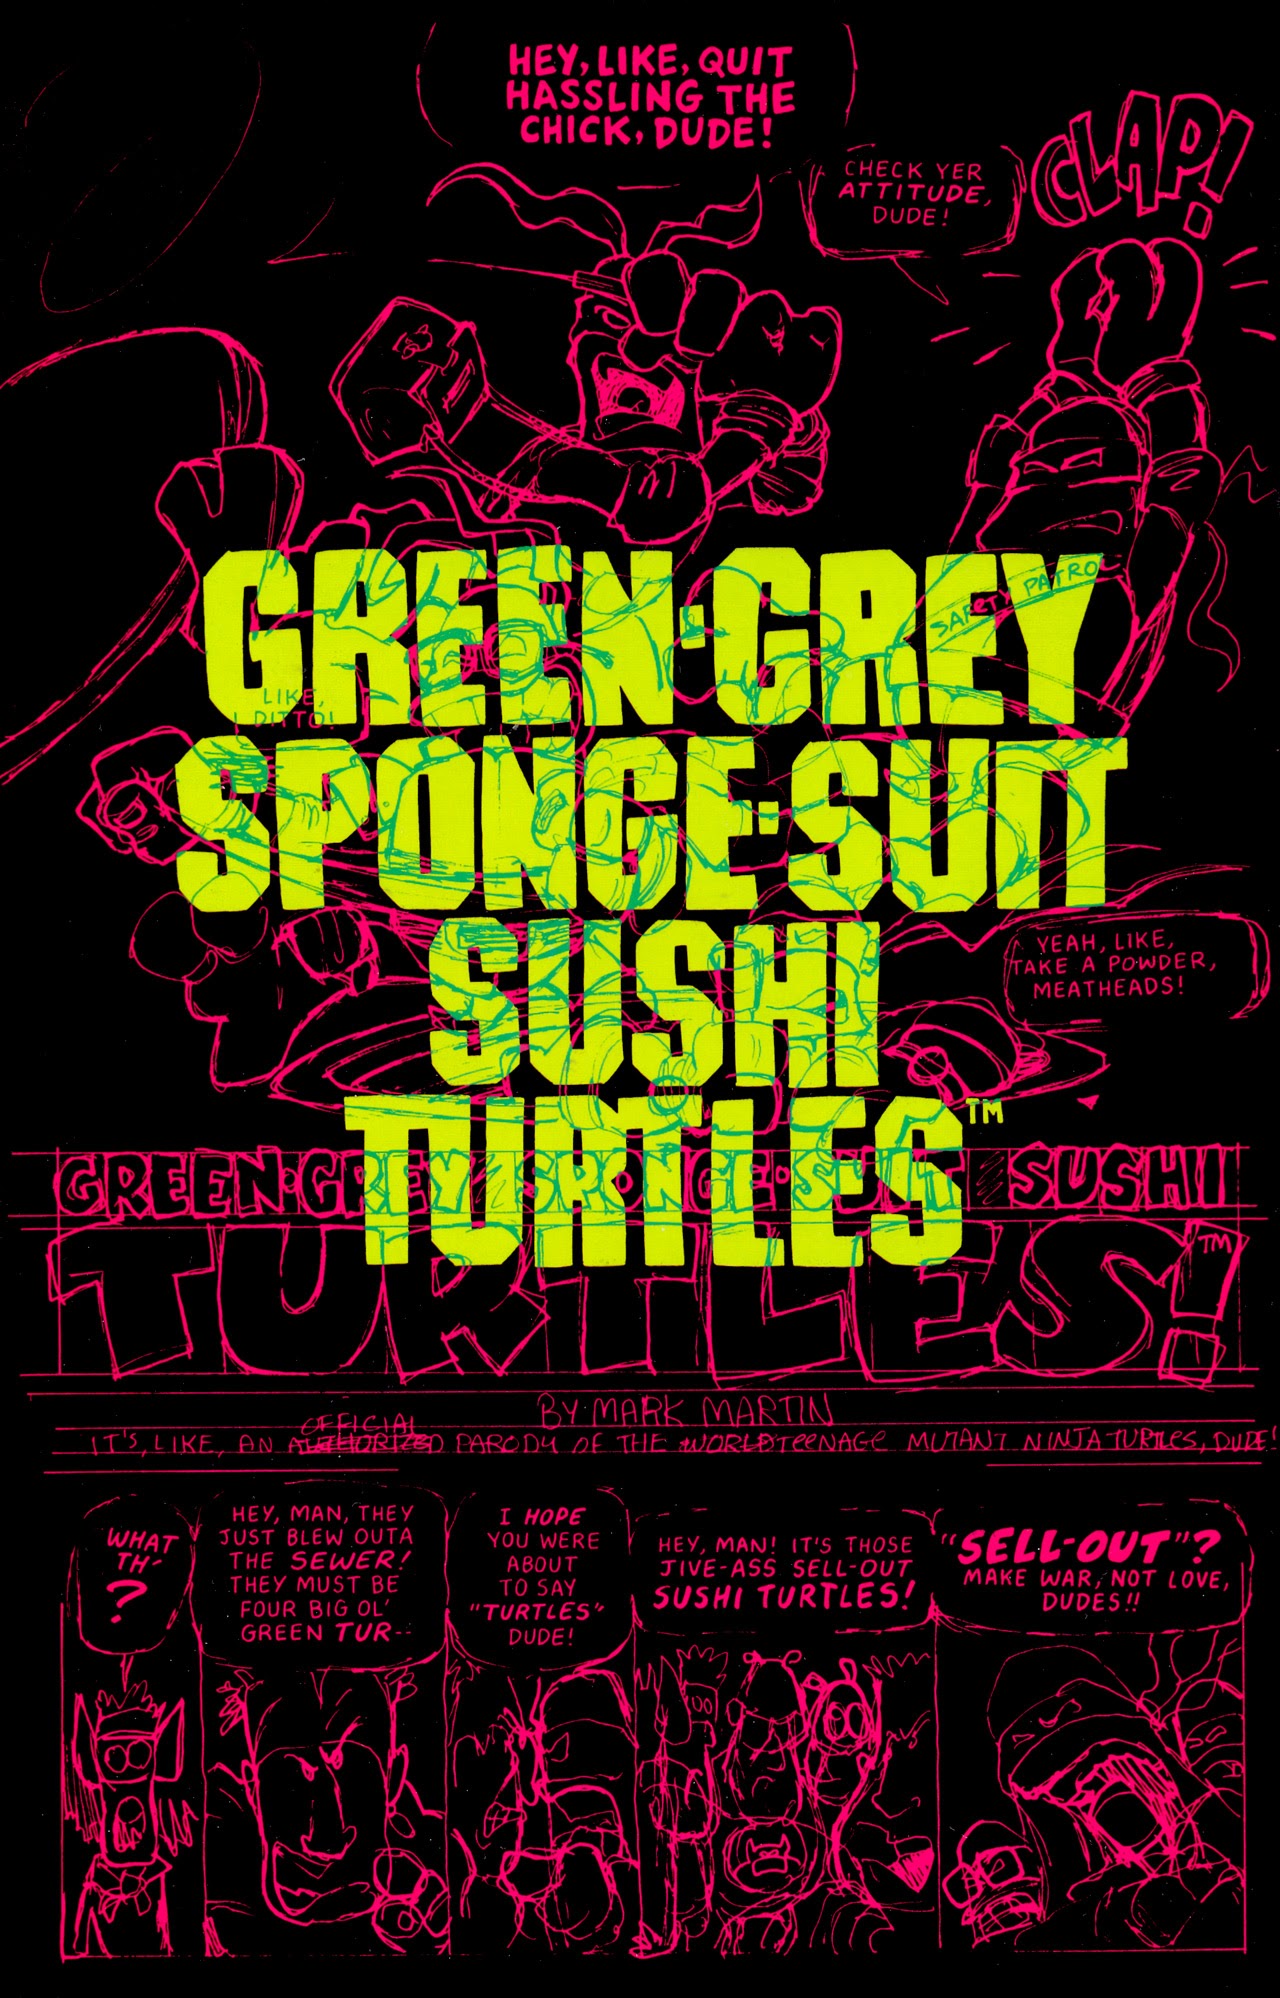 Read online Green-Grey Sponge-Suit Sushi Turtles comic -  Issue # Full - 52